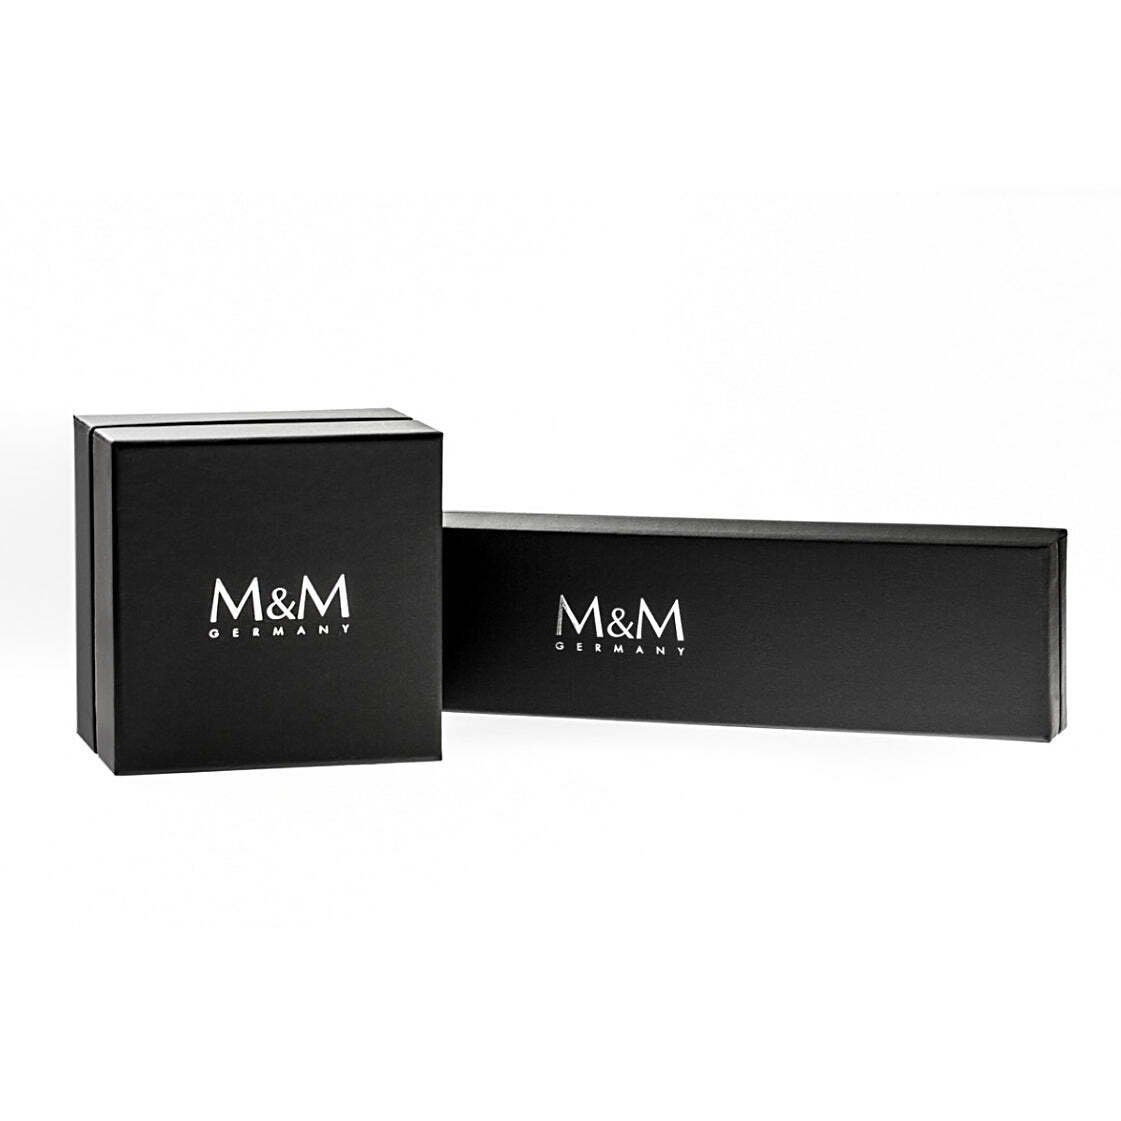 M&M rund Lederarmband, mit deutsche Designer (1-tlg), Uhr, edles Quarzuhr Etui Classic, Damen inkl. Armbanduhr Manufaktur, Leder New Analoguhr